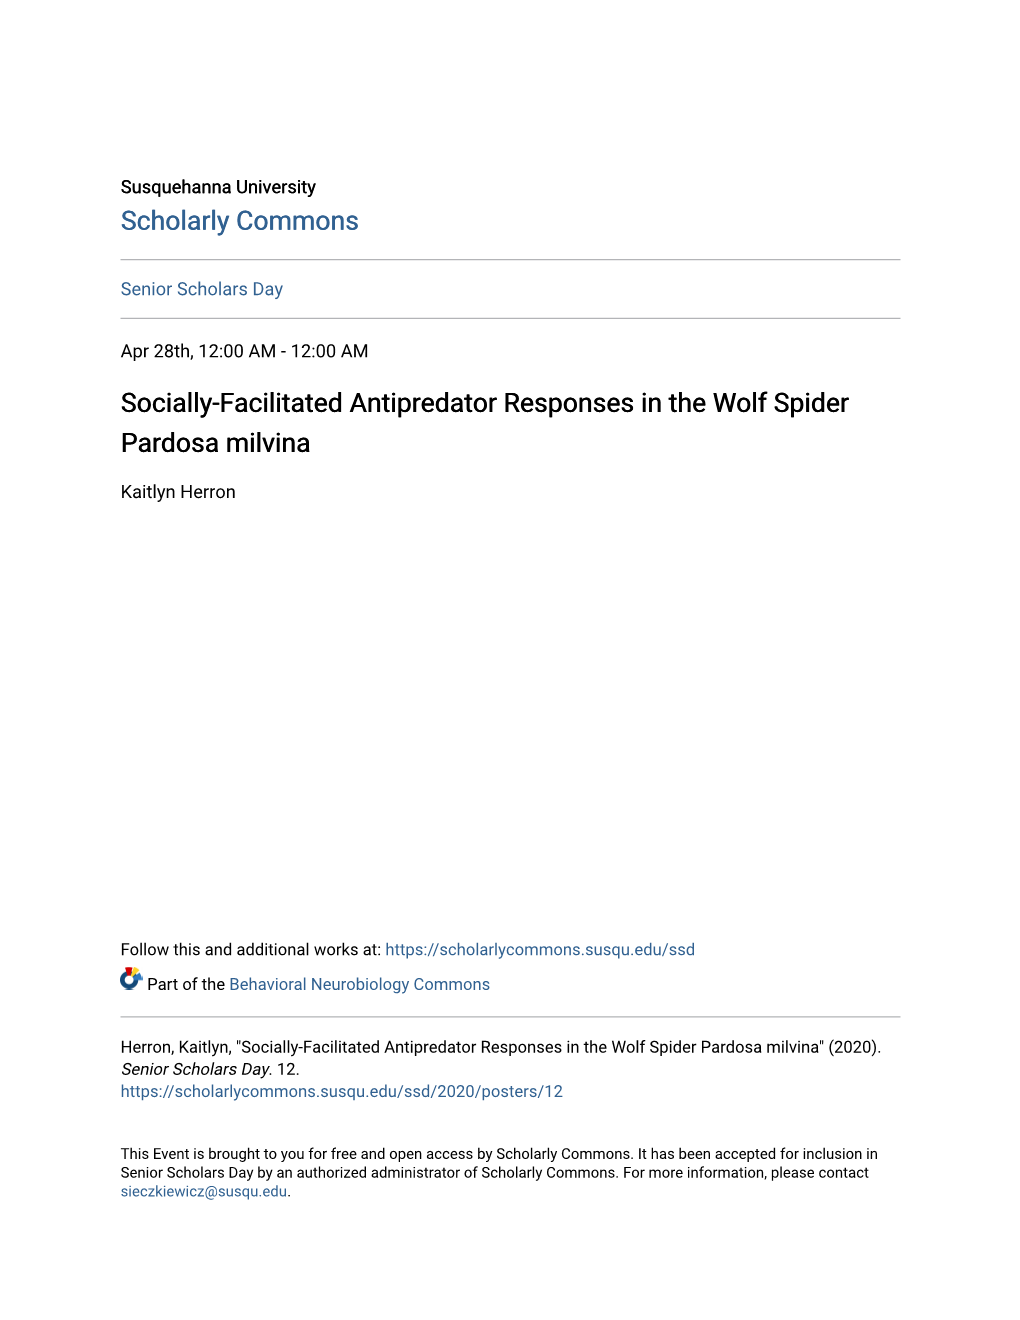 Socially-Facilitated Antipredator Responses in the Wolf Spider Pardosa Milvina